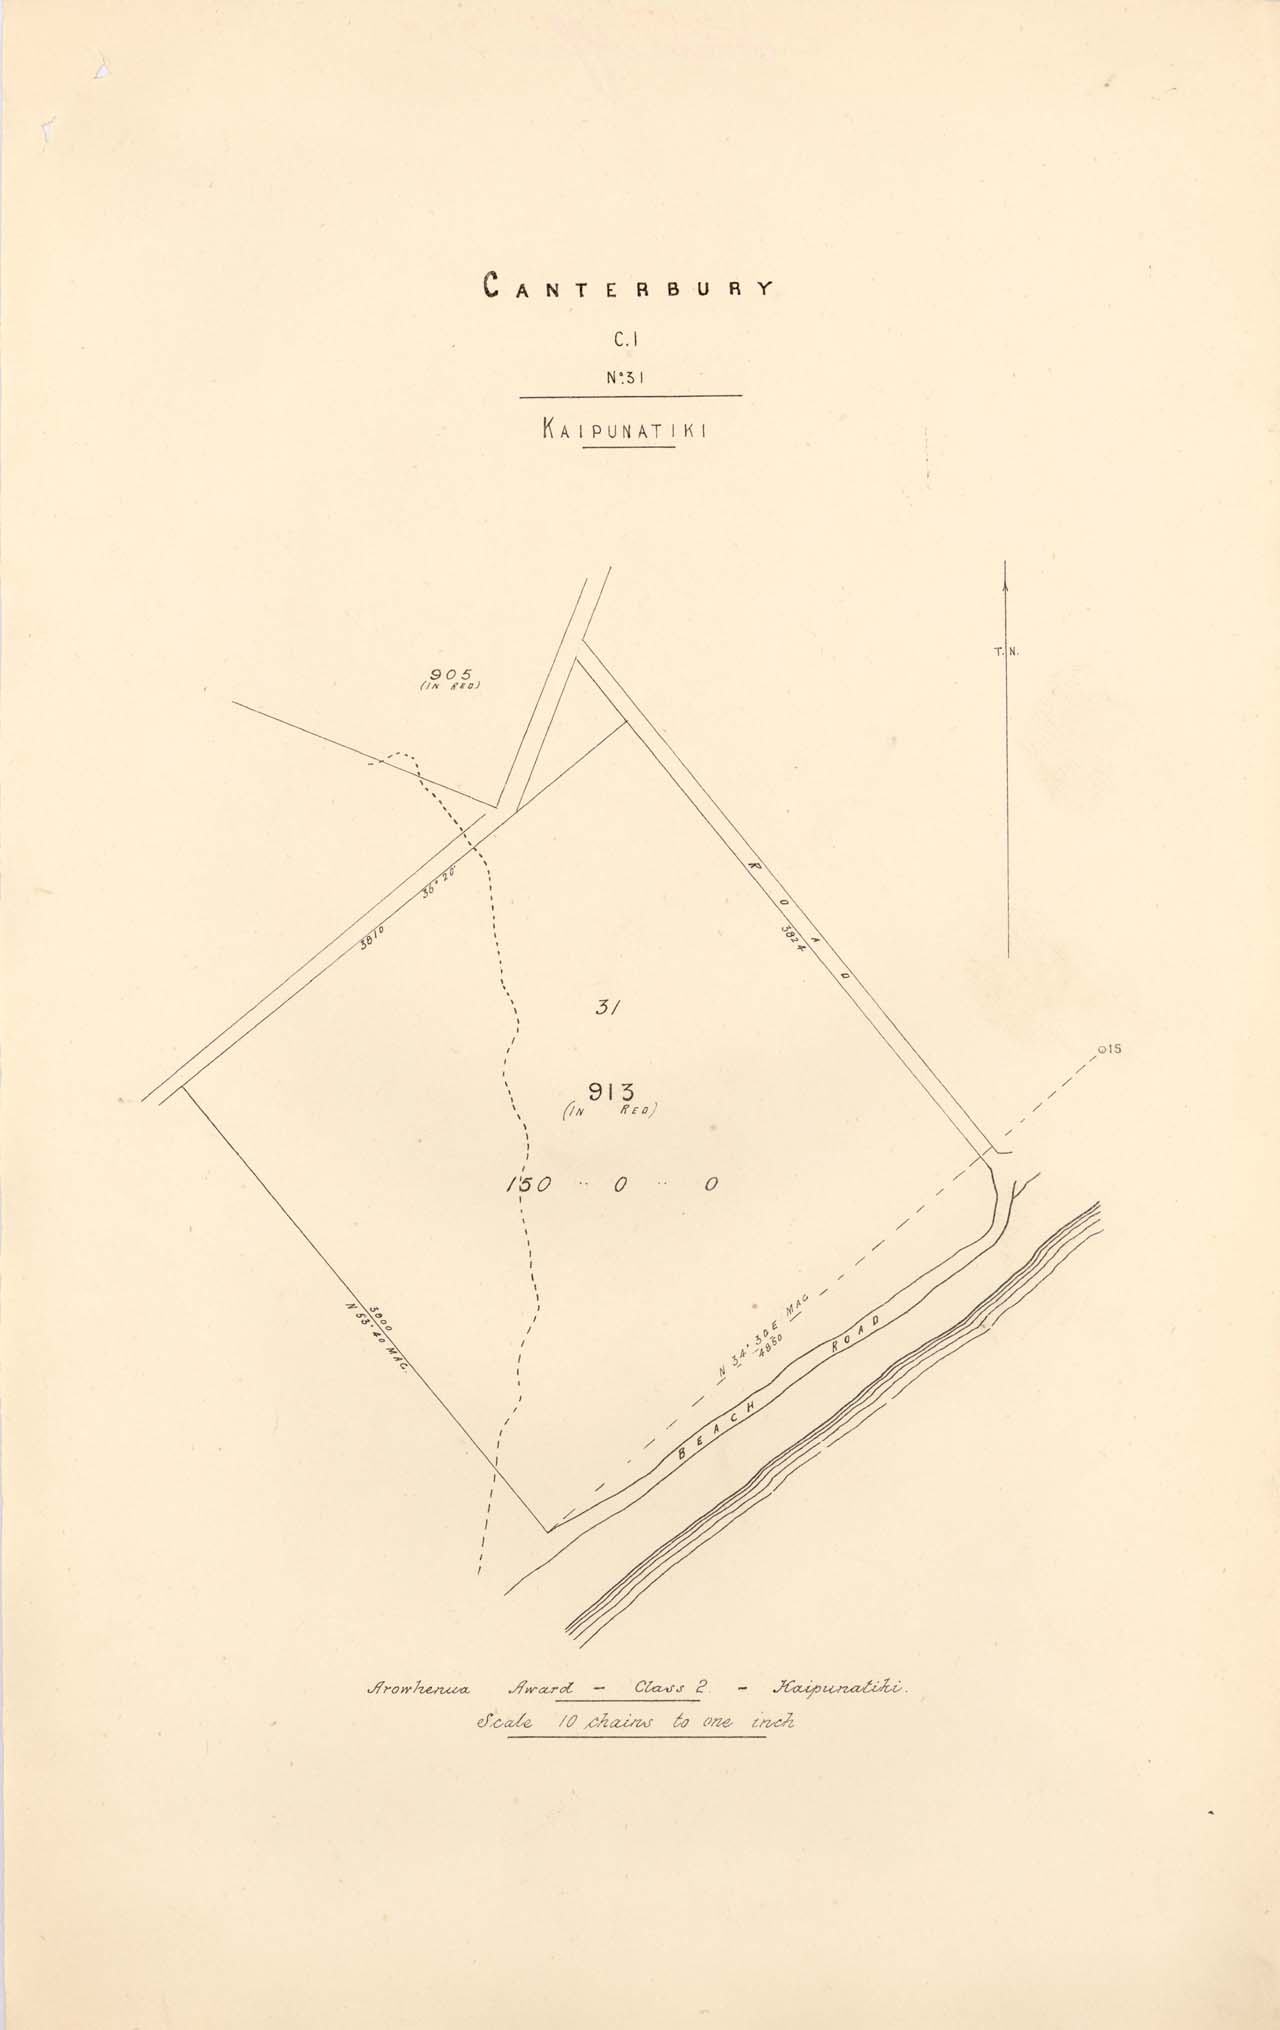 Reserve 913 - Kaipunatiki - 1870